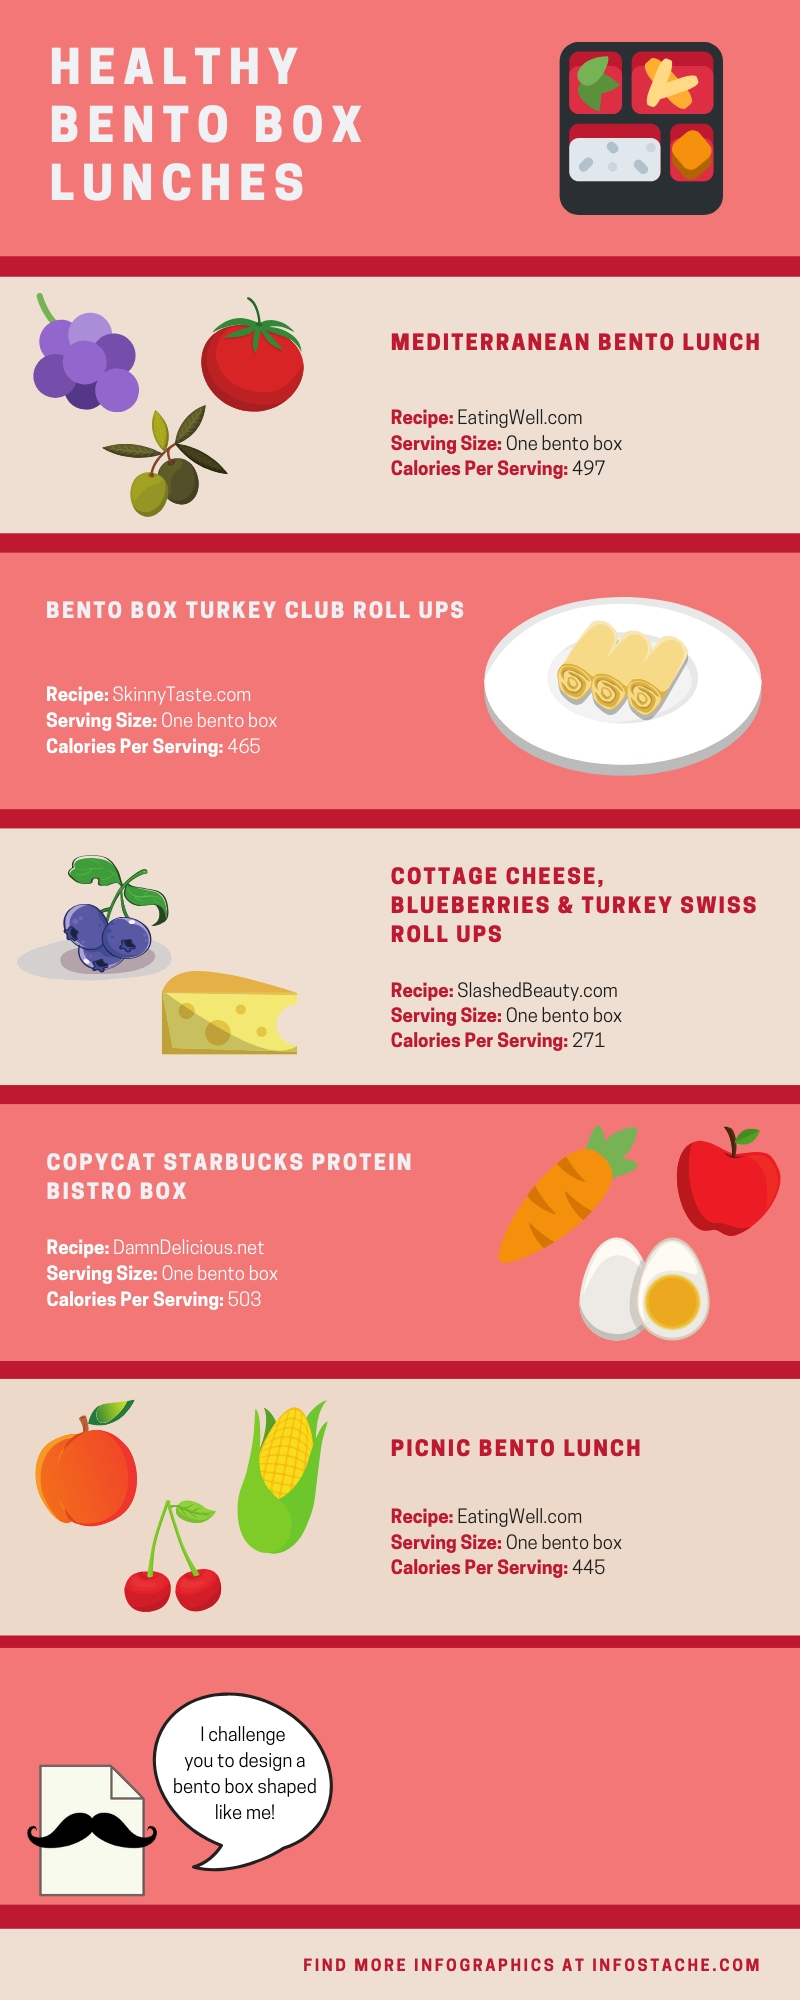 https://infostache.com/wp-content/uploads/2019/05/Healthy-Bento-Box-Lunches.jpg